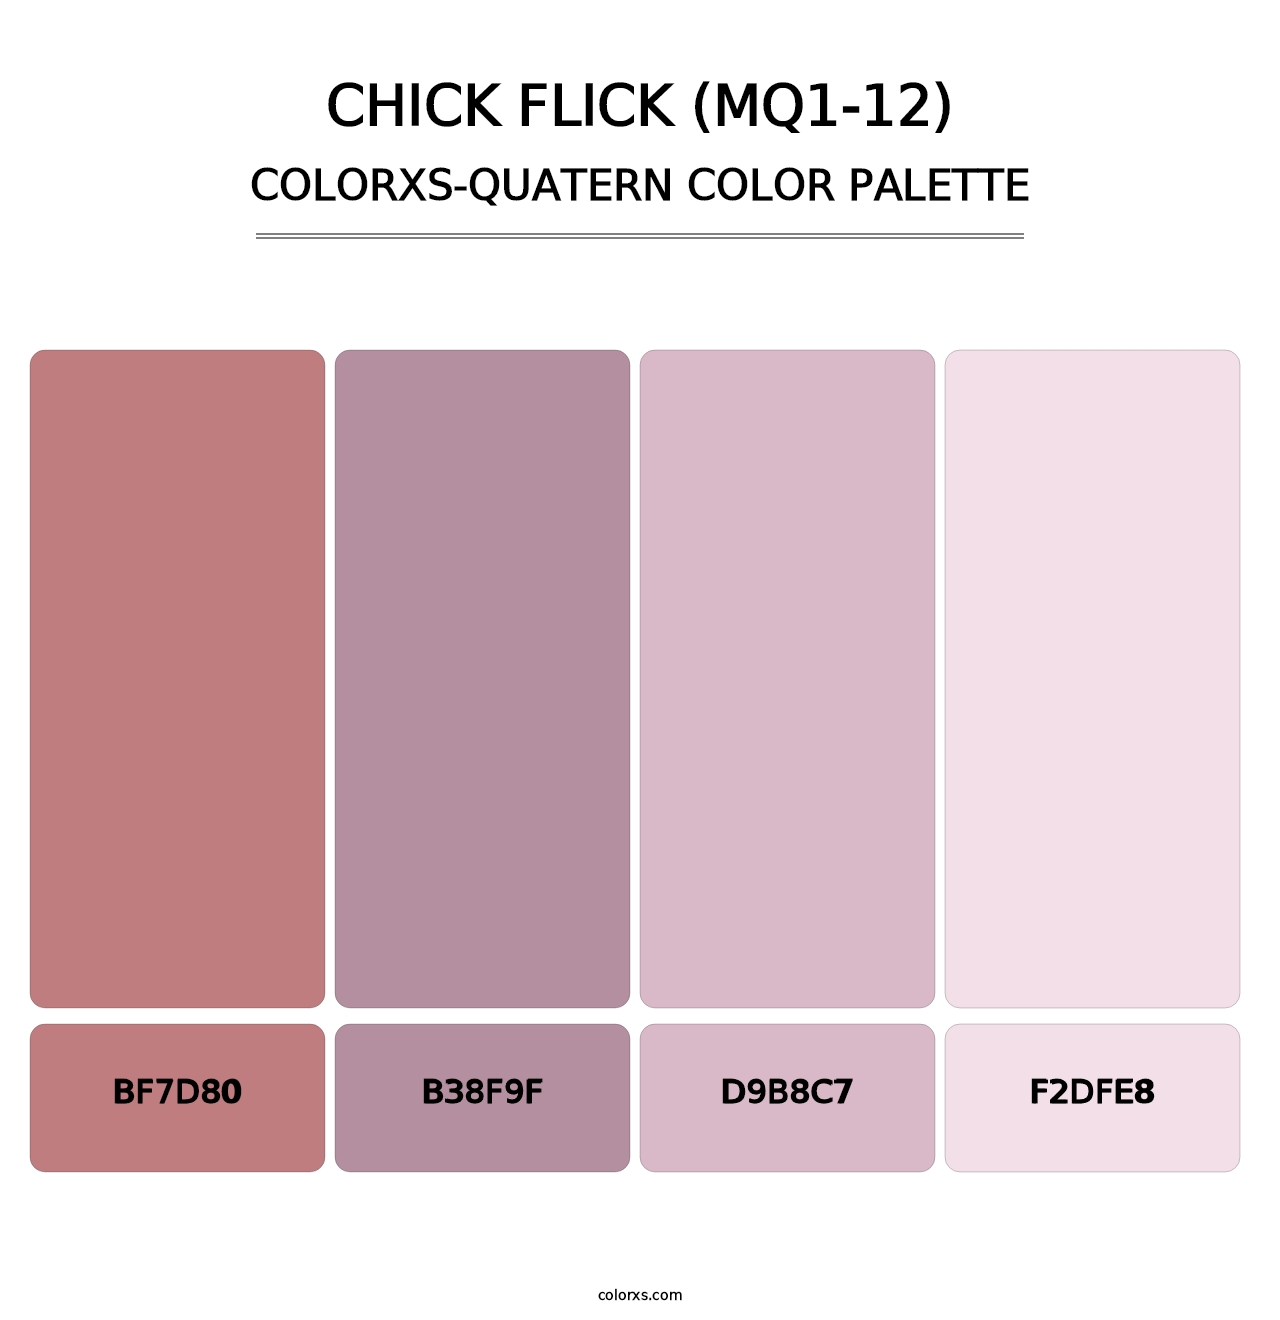 Chick Flick (MQ1-12) - Colorxs Quatern Palette